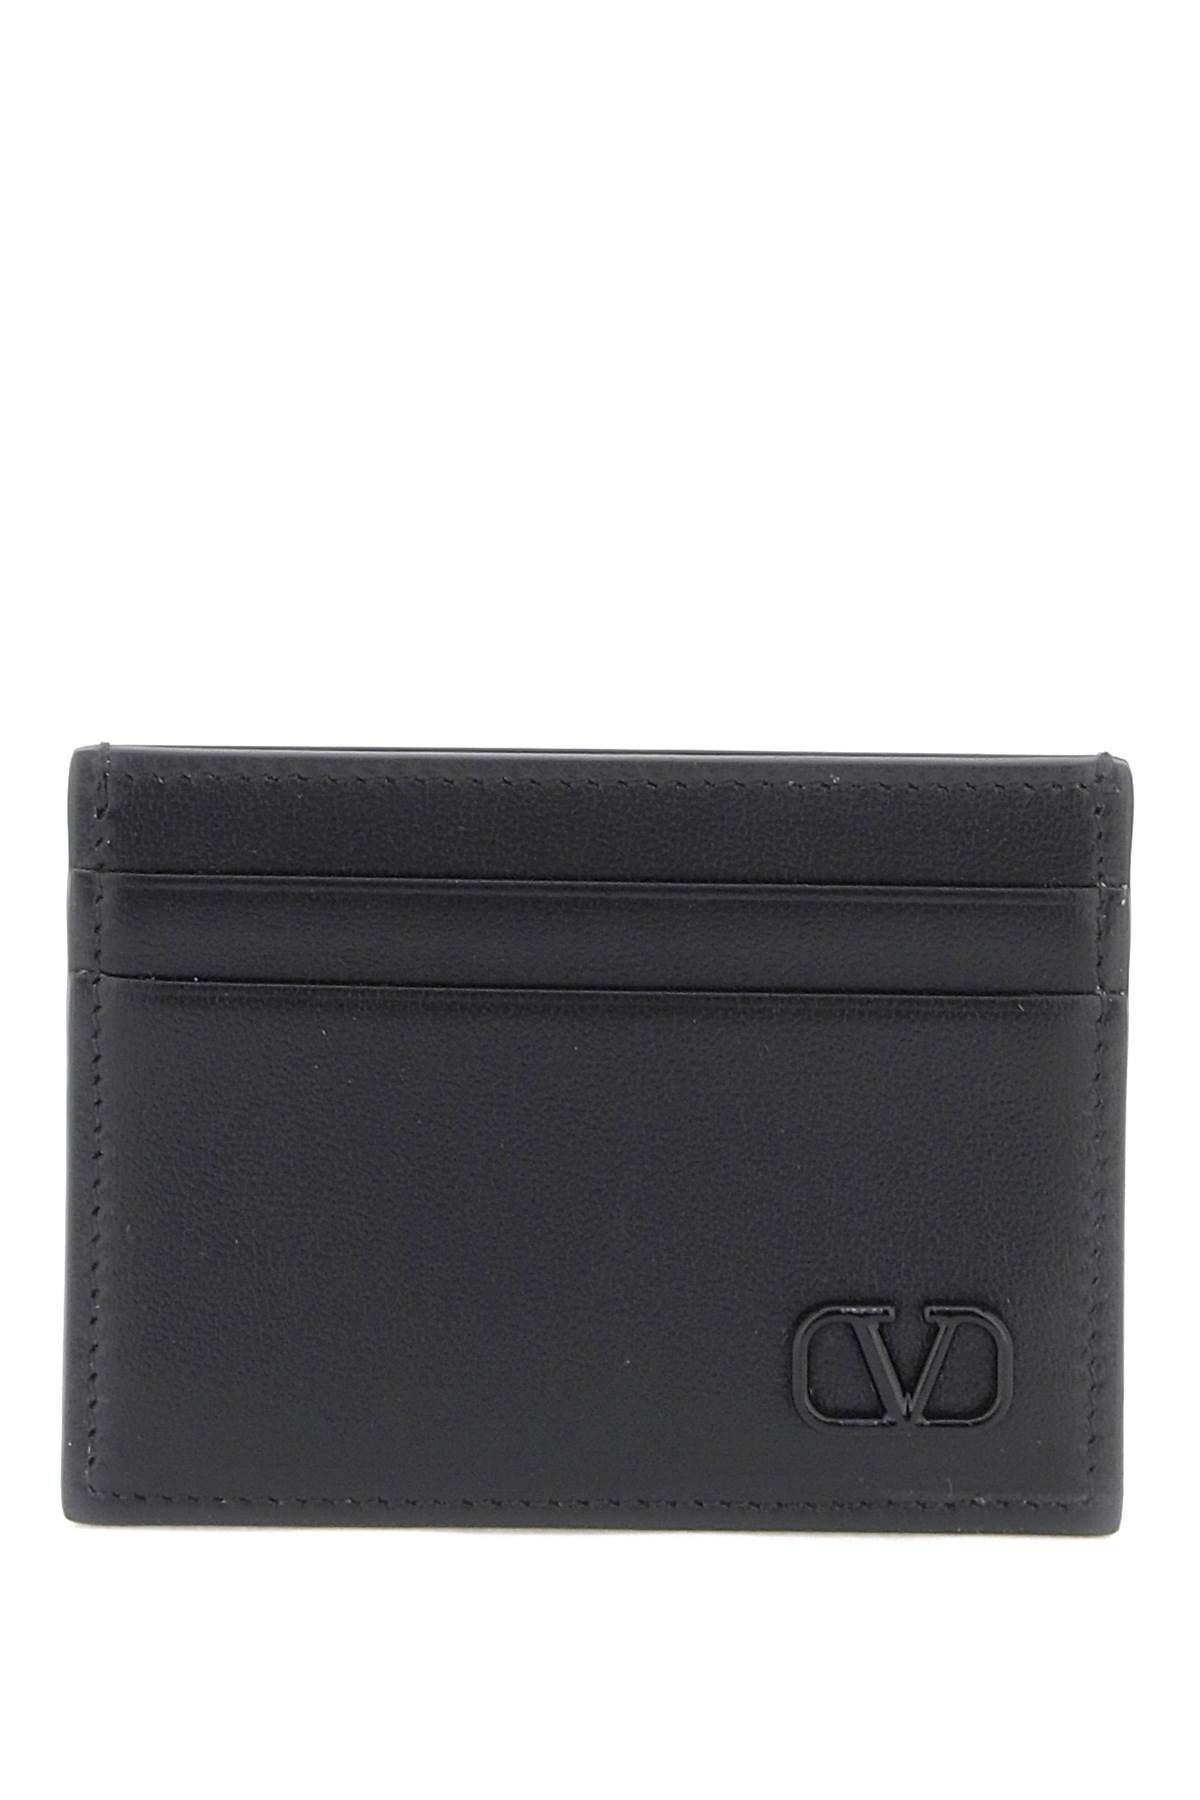 VALENTINO GARAVANI "leather vlogo signature card